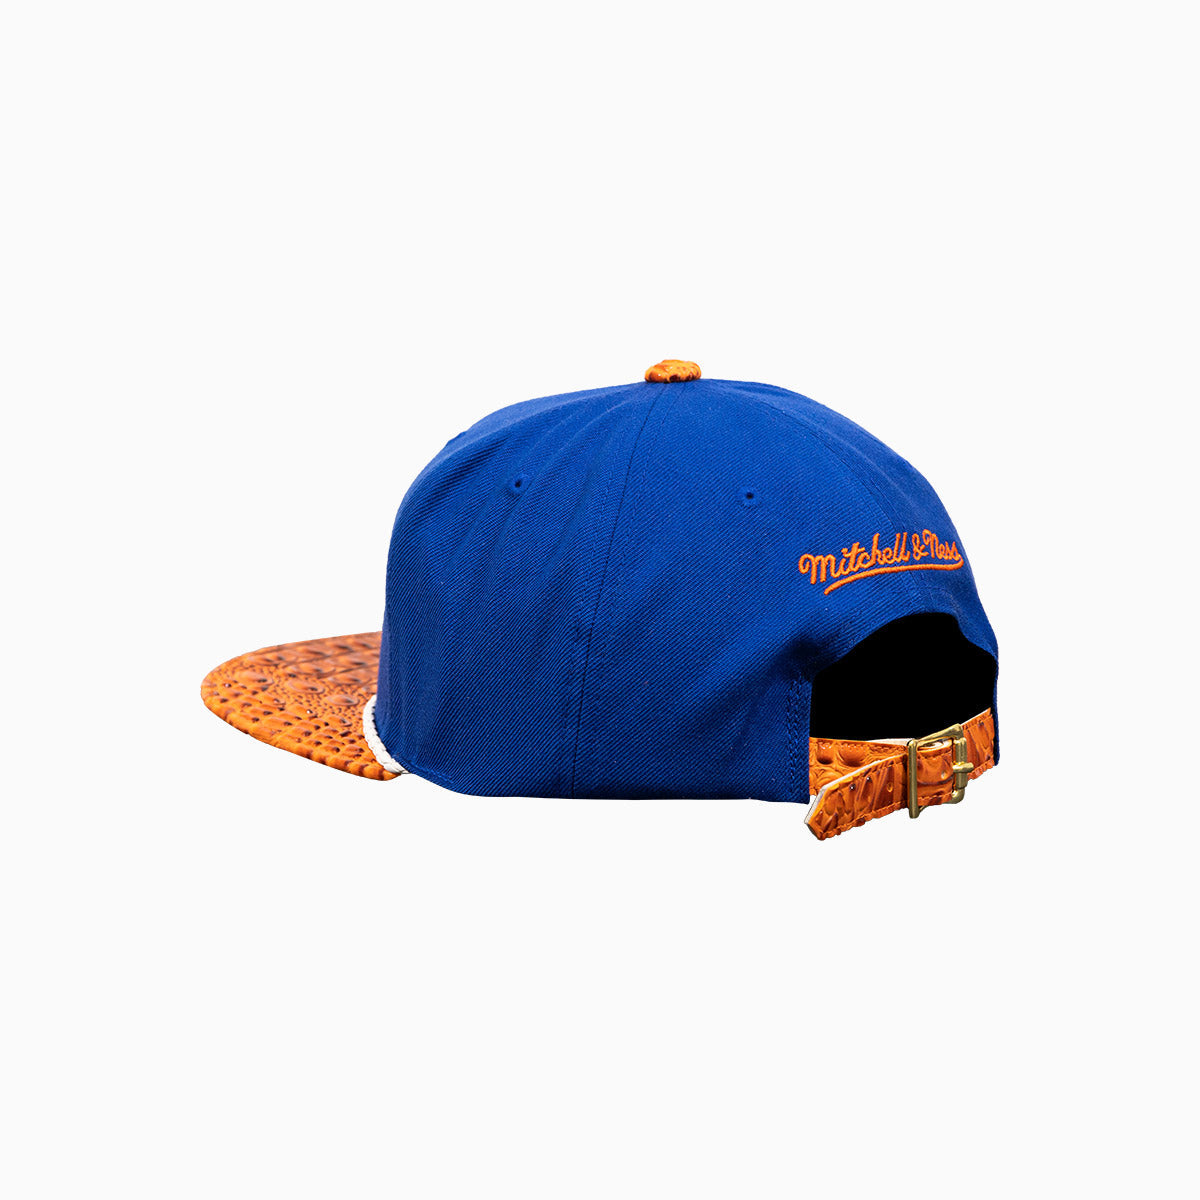 breyers-buck-50-new-york-knicks-hat-with-leather-visor-breyers-tnykh-blue-orange